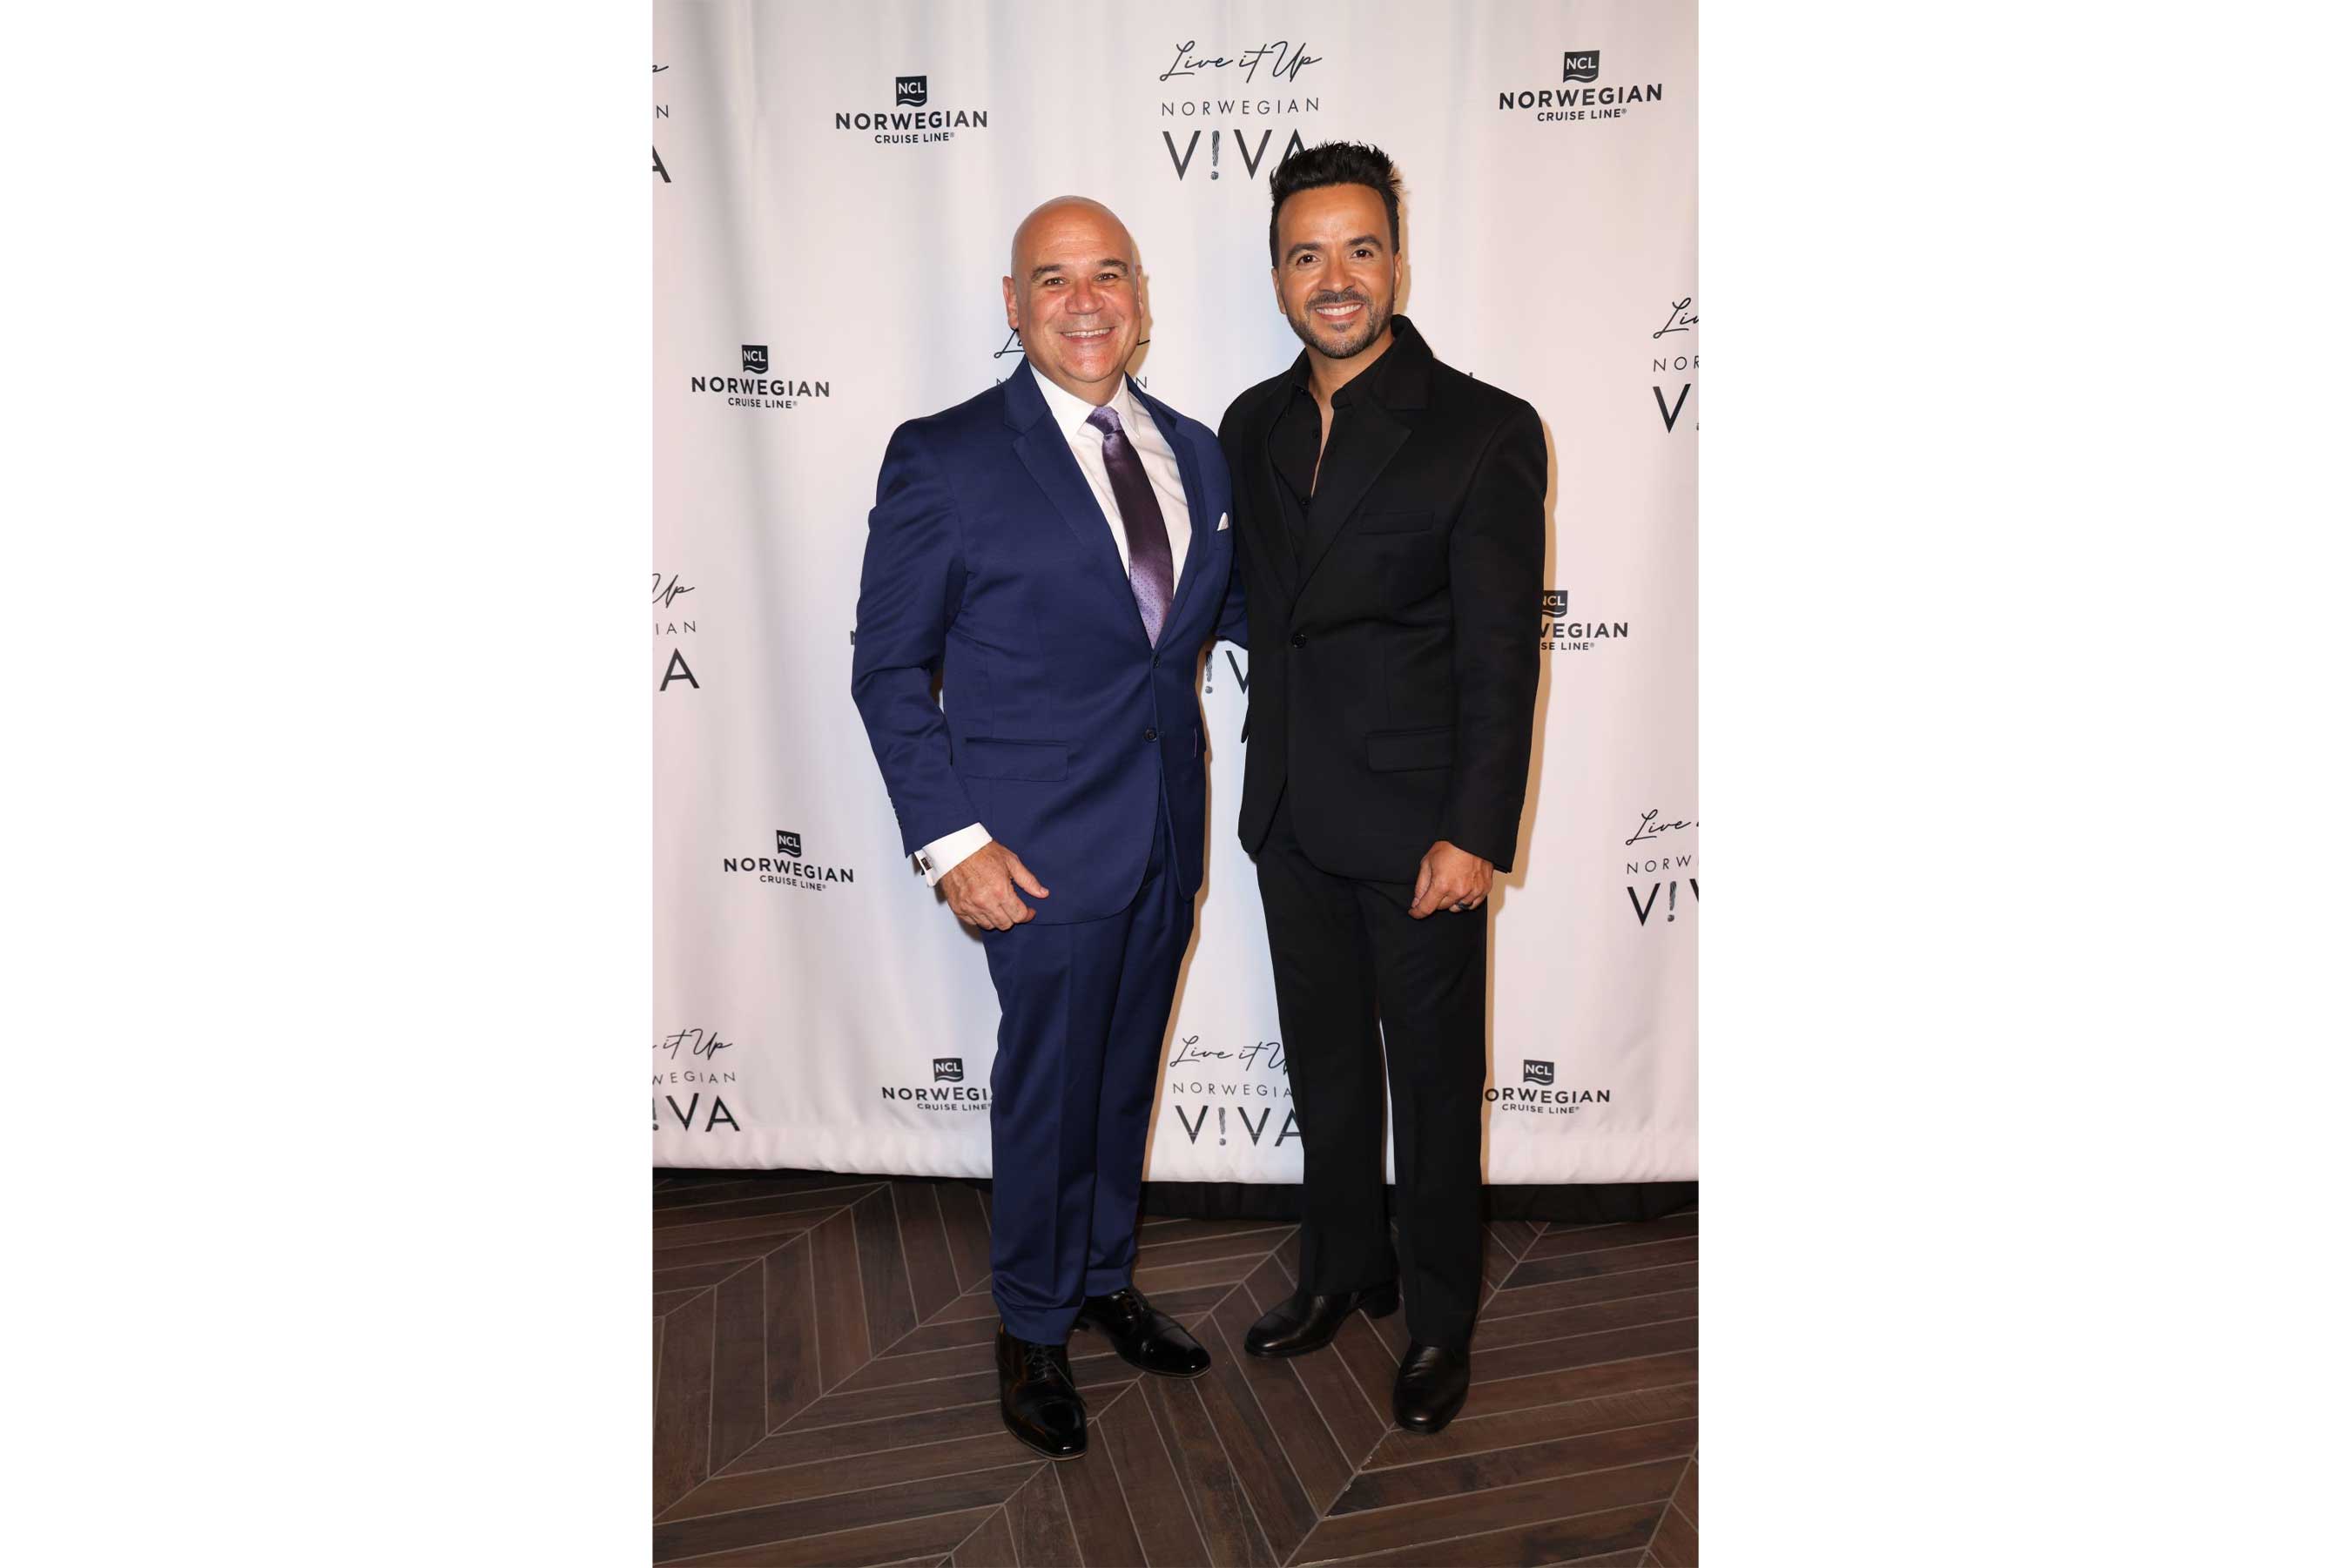 Luis Fonsi, global music sensation and appointed godfather to Norwegian Viva, with Norwegian Cruise Line President, David J. Herrera.